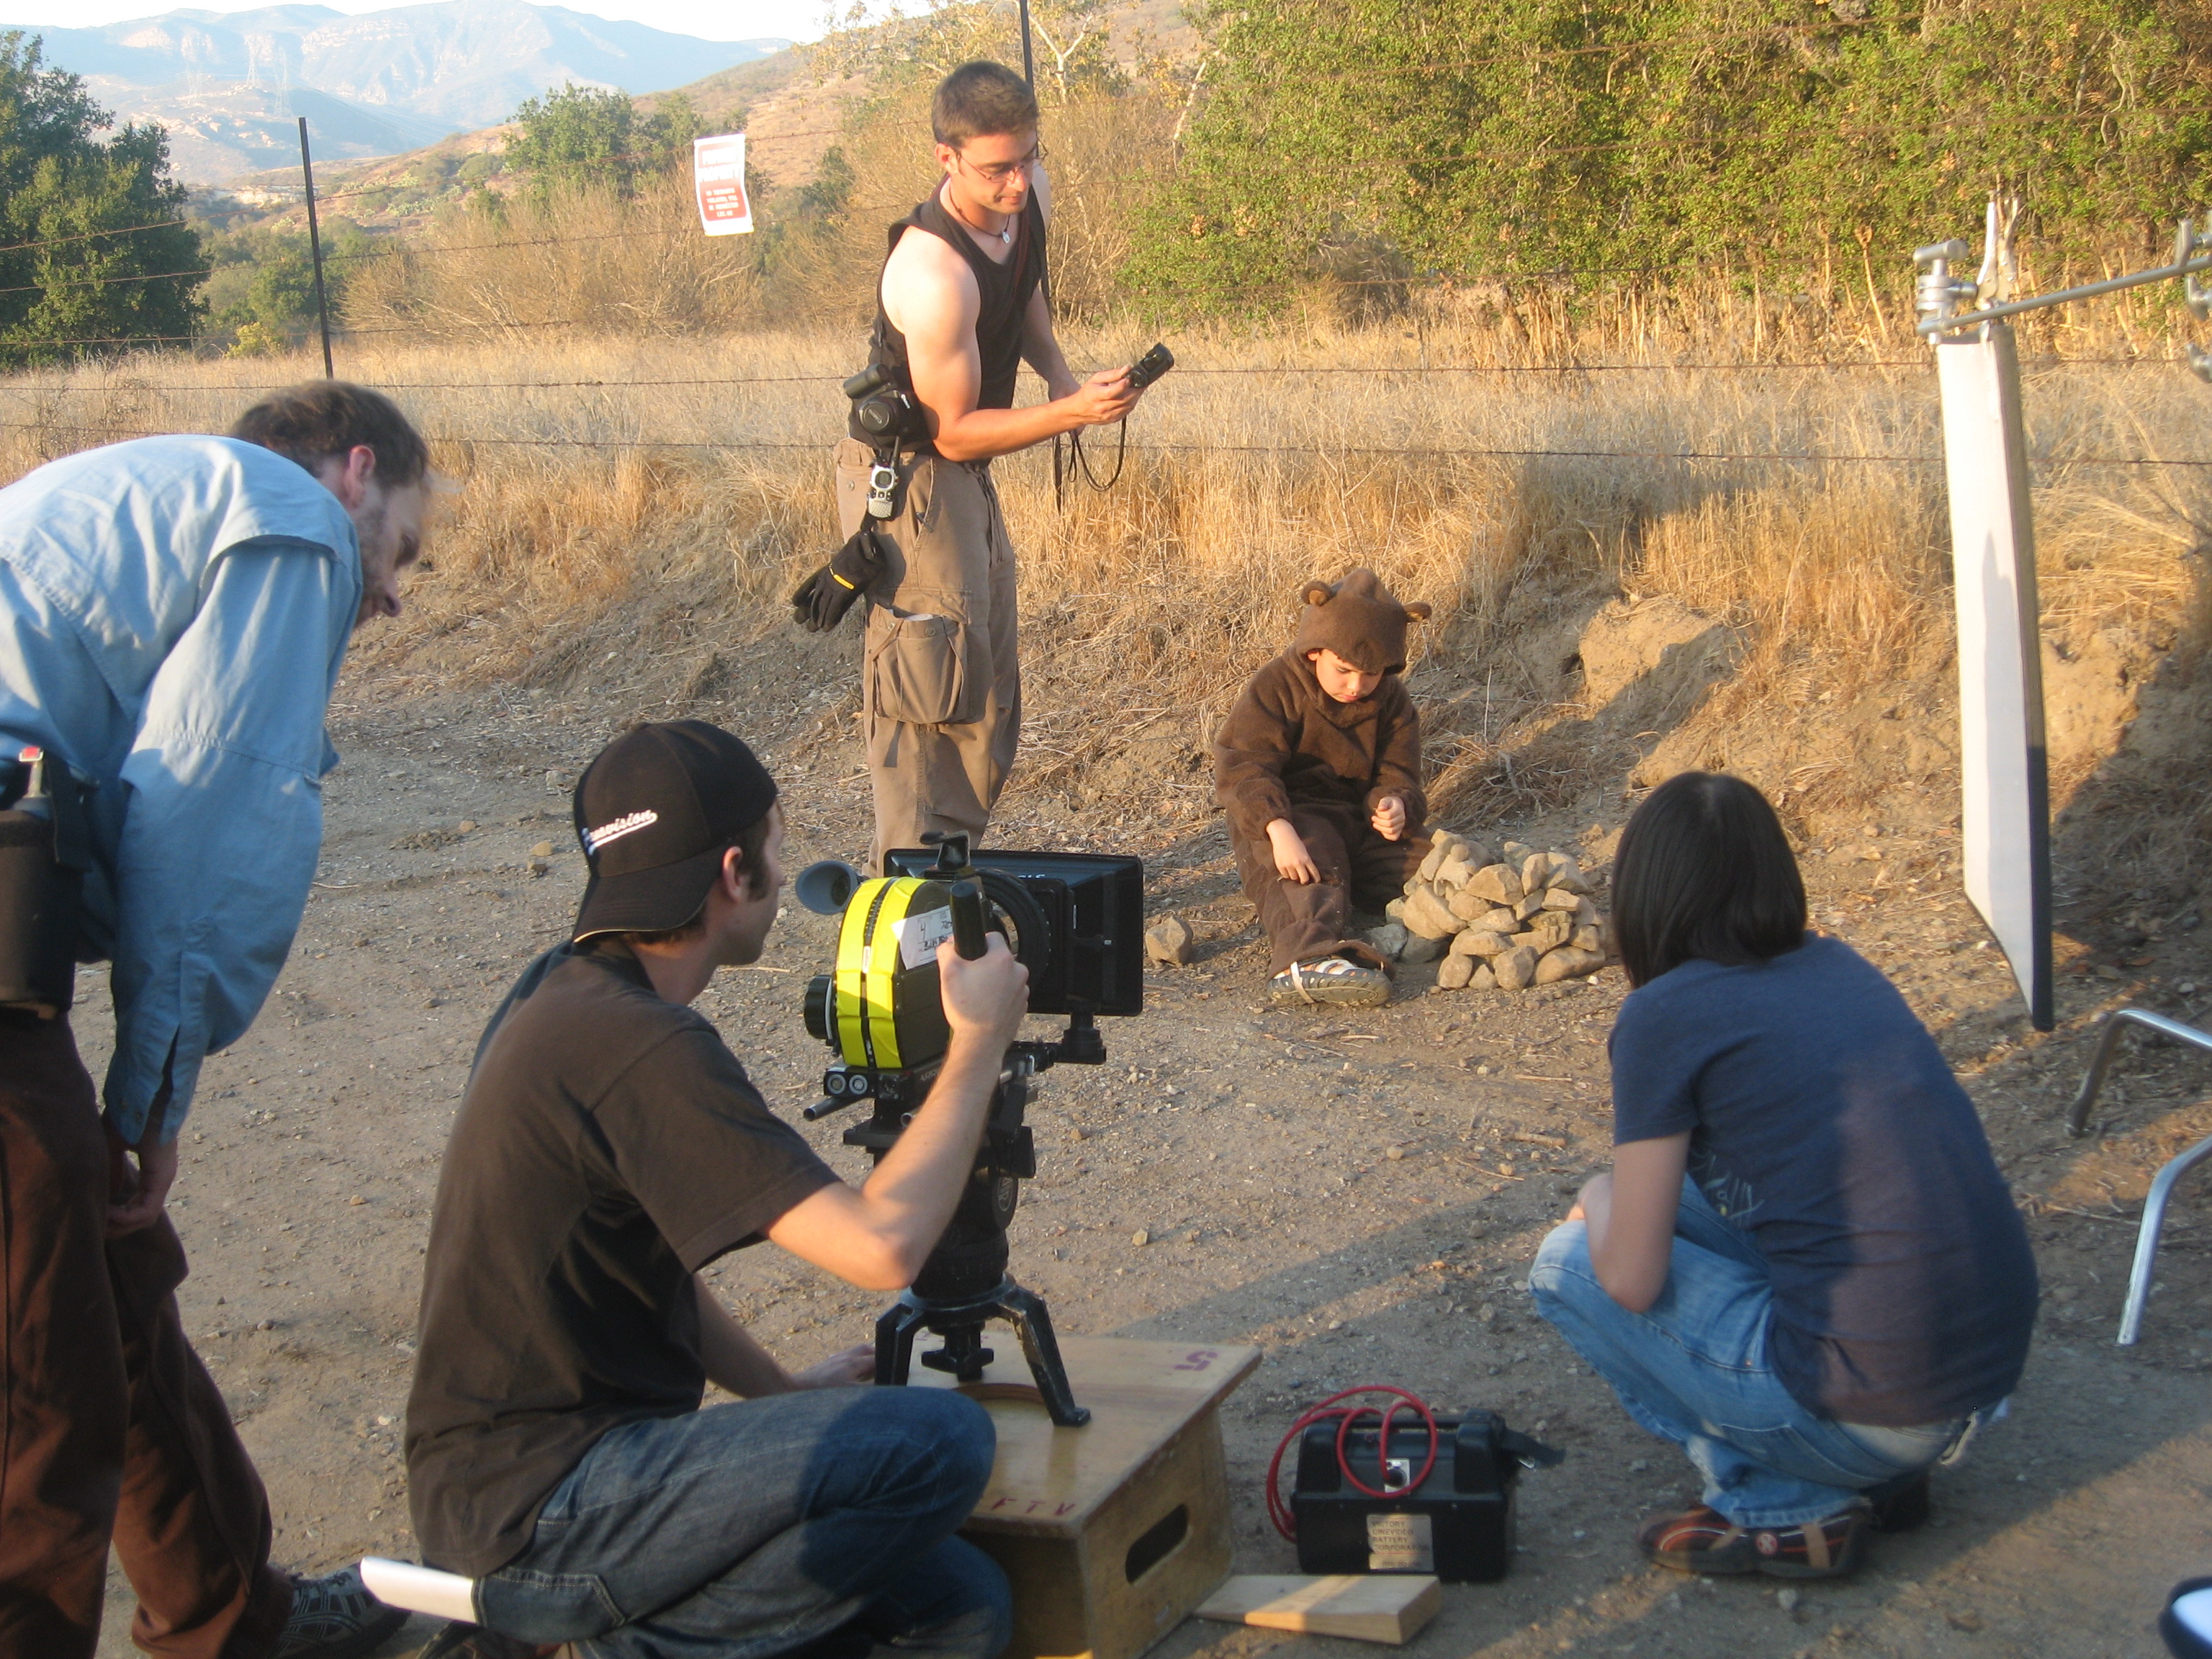 Brenden Miranda shooting a scene from the film 